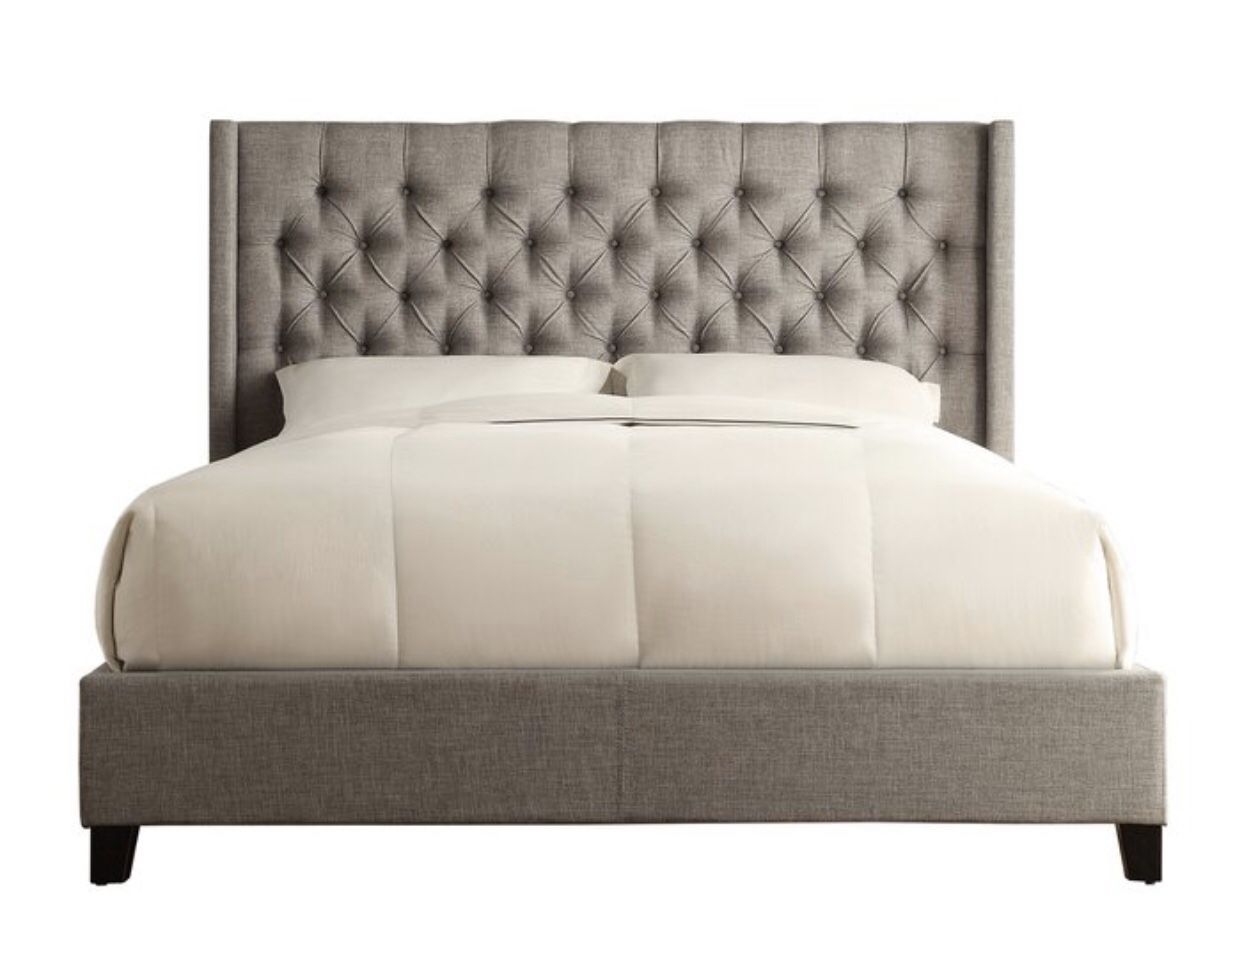 King size bed frame & headboard grey